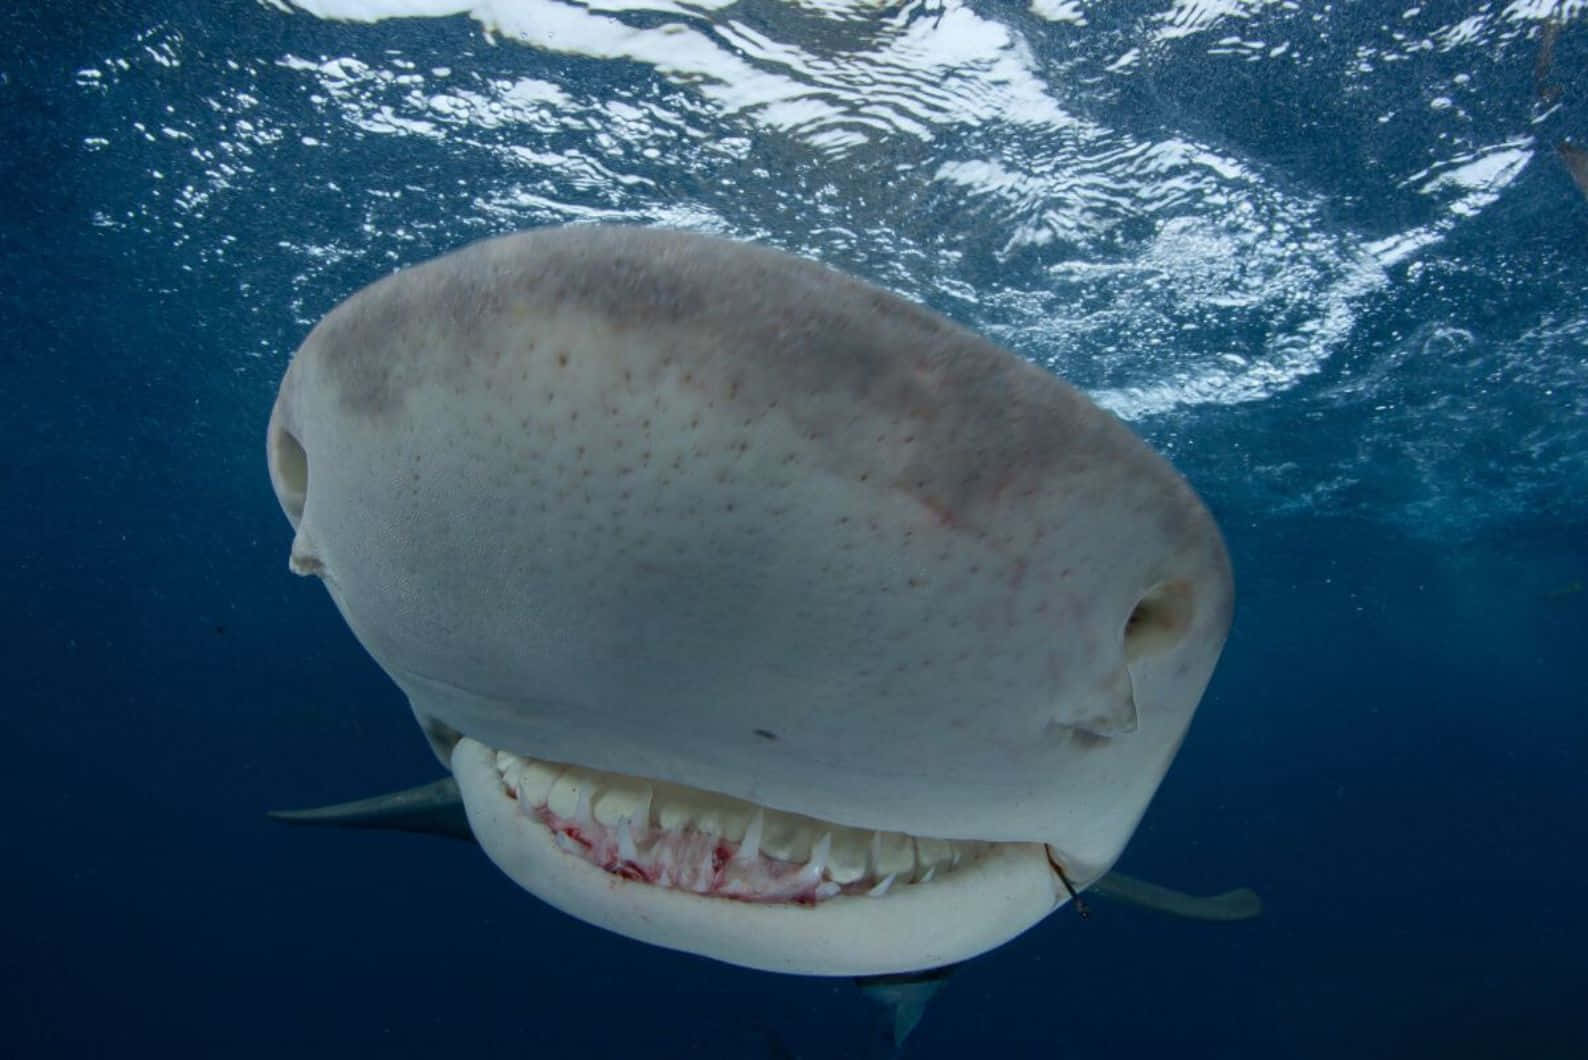 Lemon Shark Up Close Underwater.jpg Wallpaper